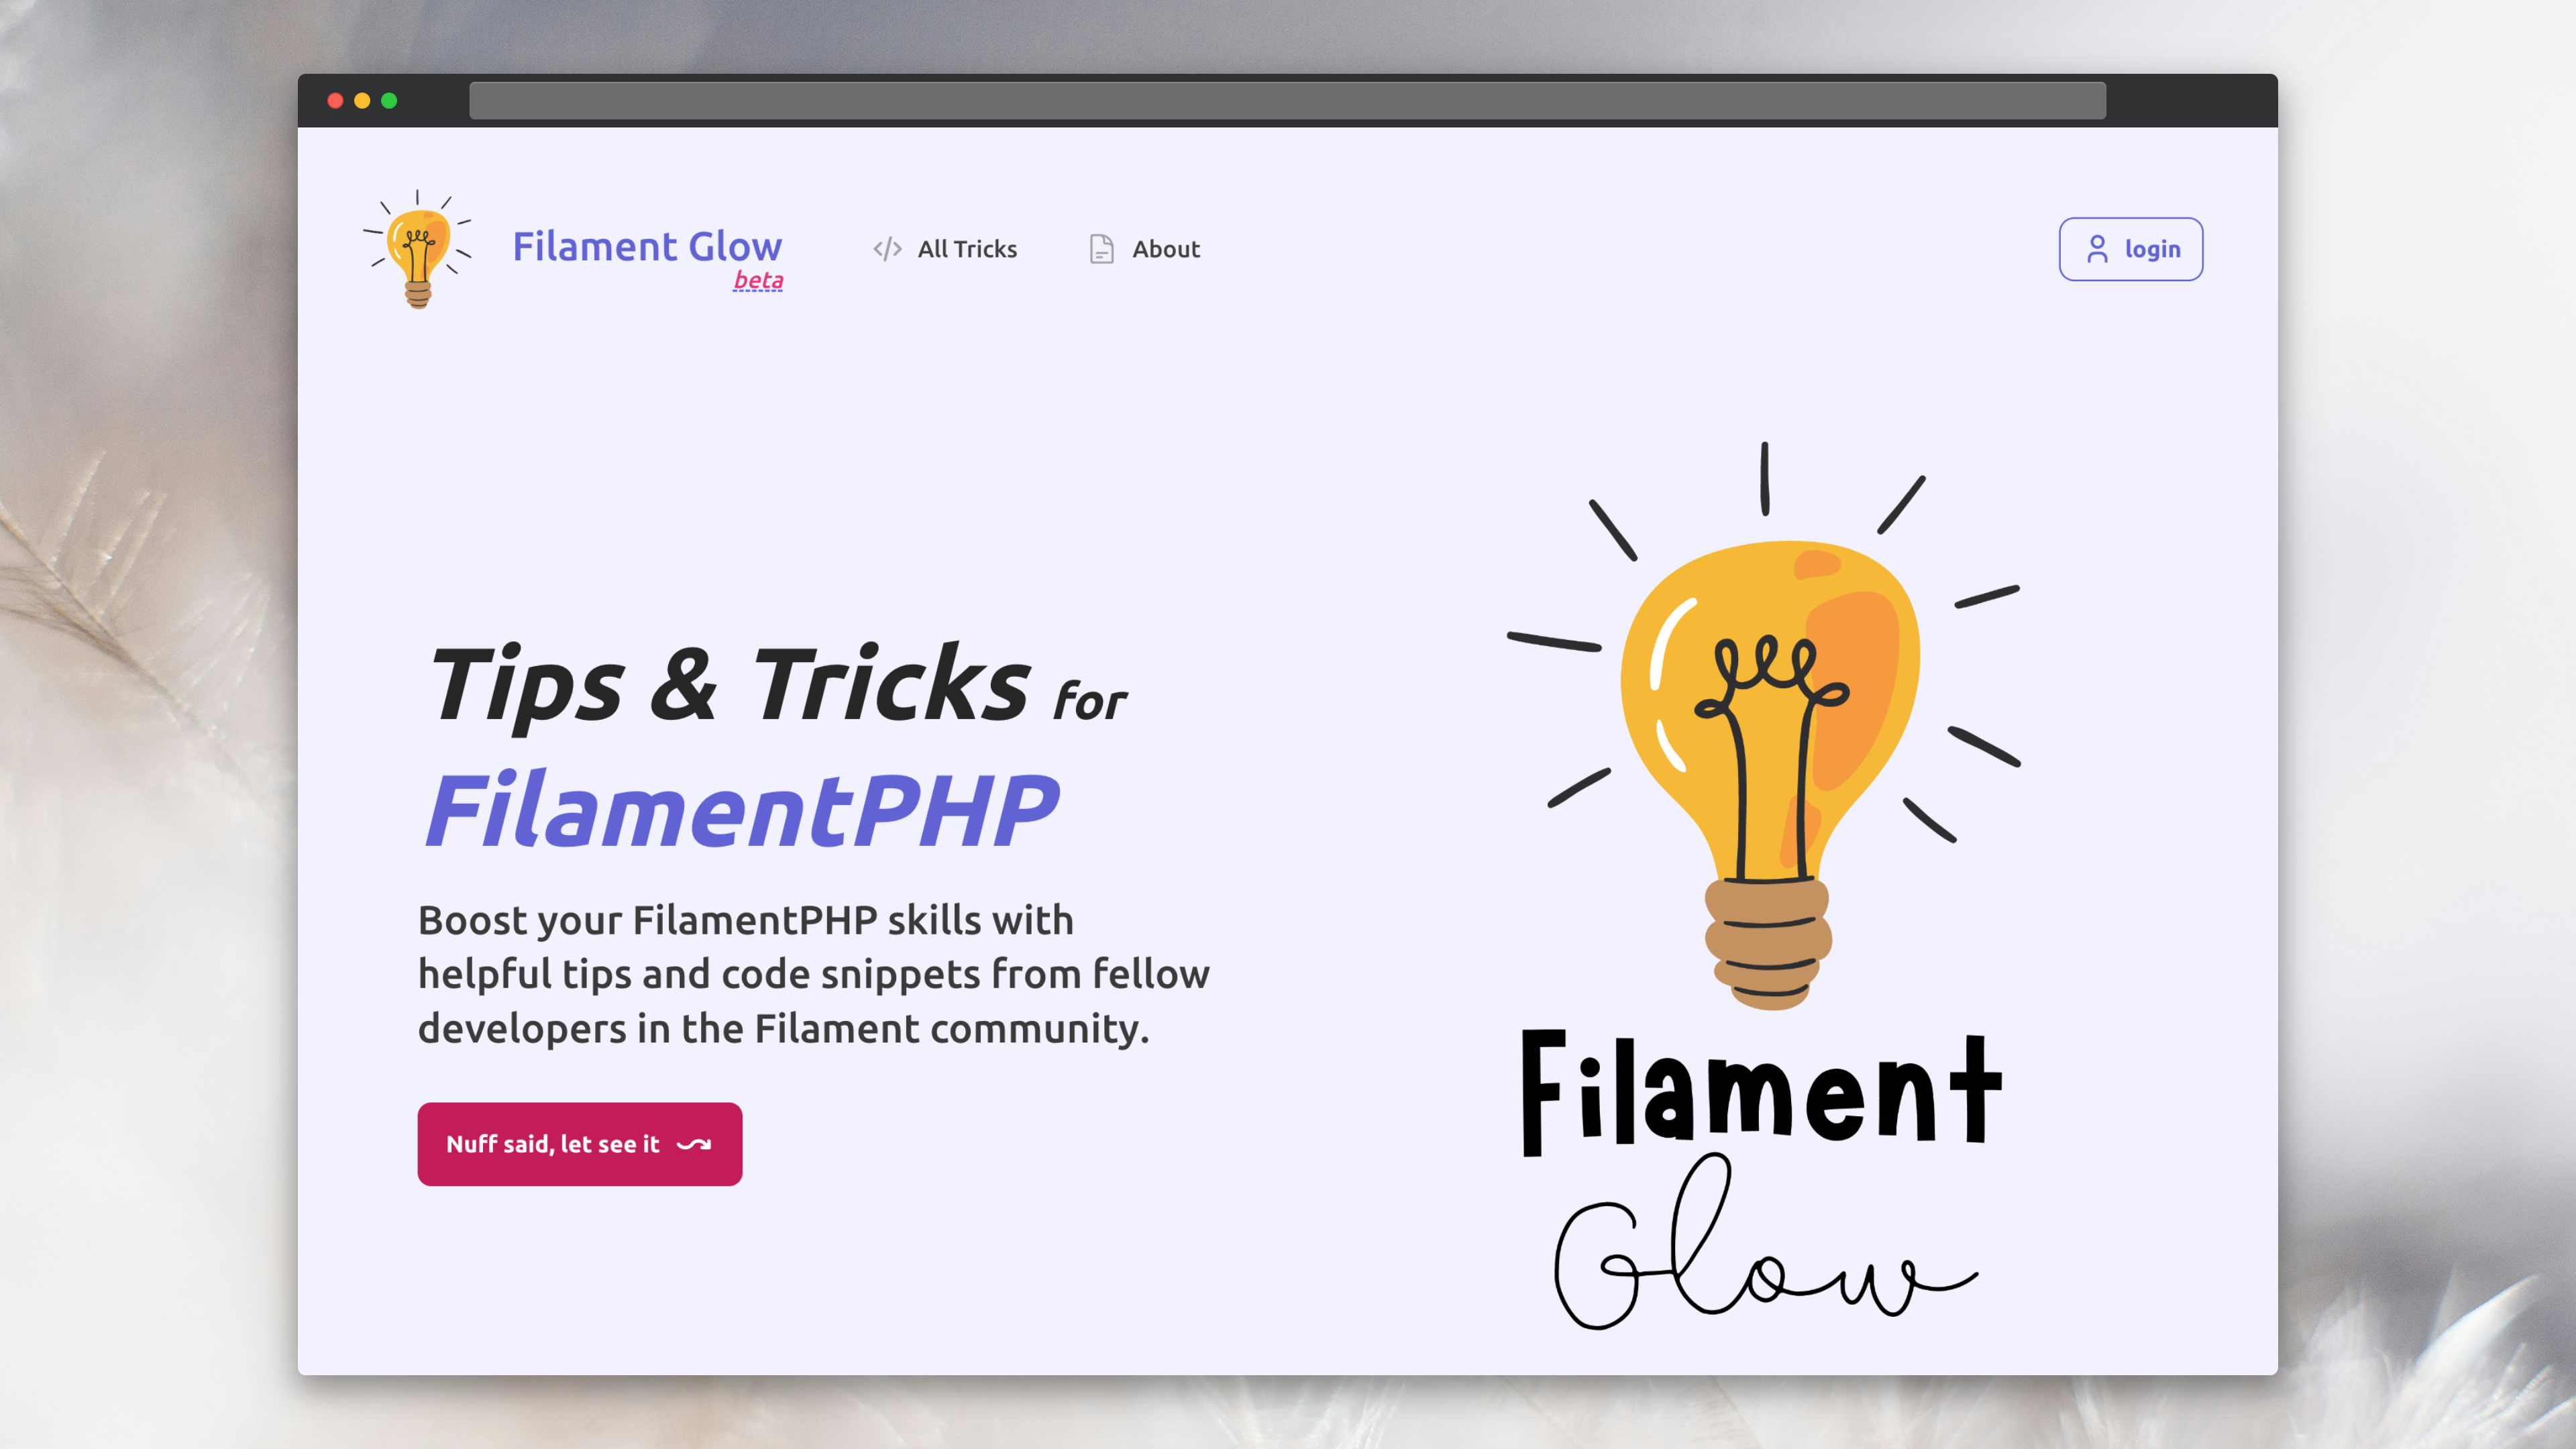 image for Filament Glow: Tips & Tricks for FilamentPHP